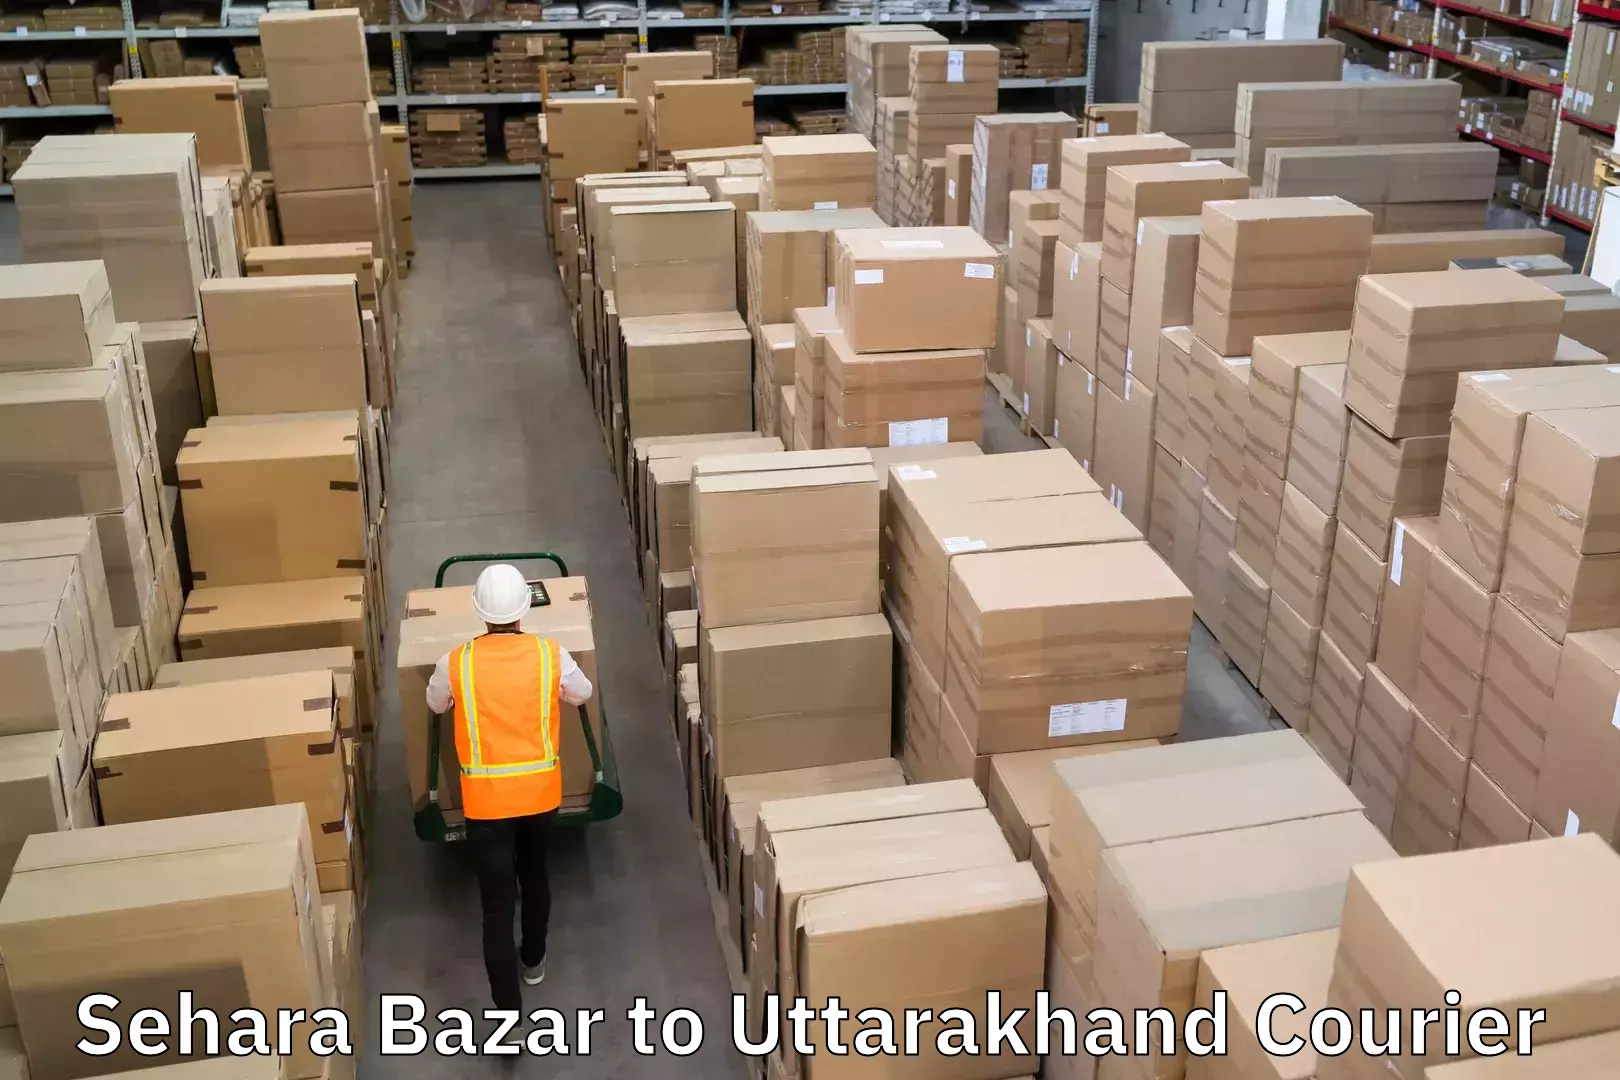 Reliable parcel services Sehara Bazar to Uttarakhand